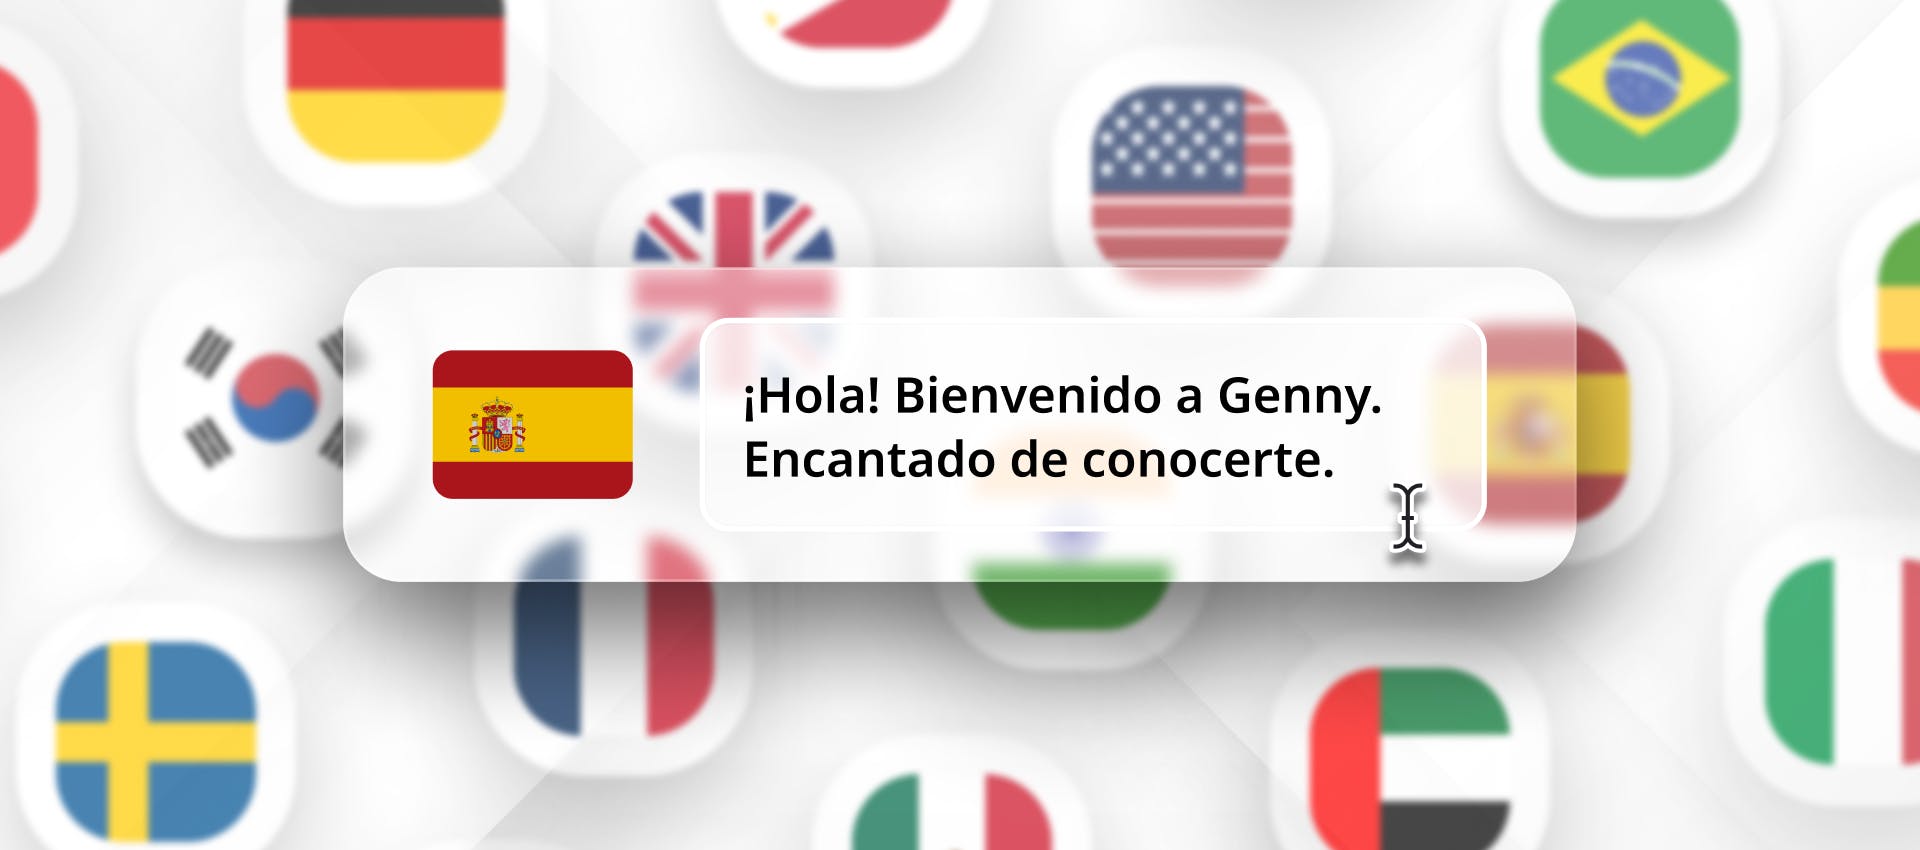 Spanish phrase for Spanish text to speech tool